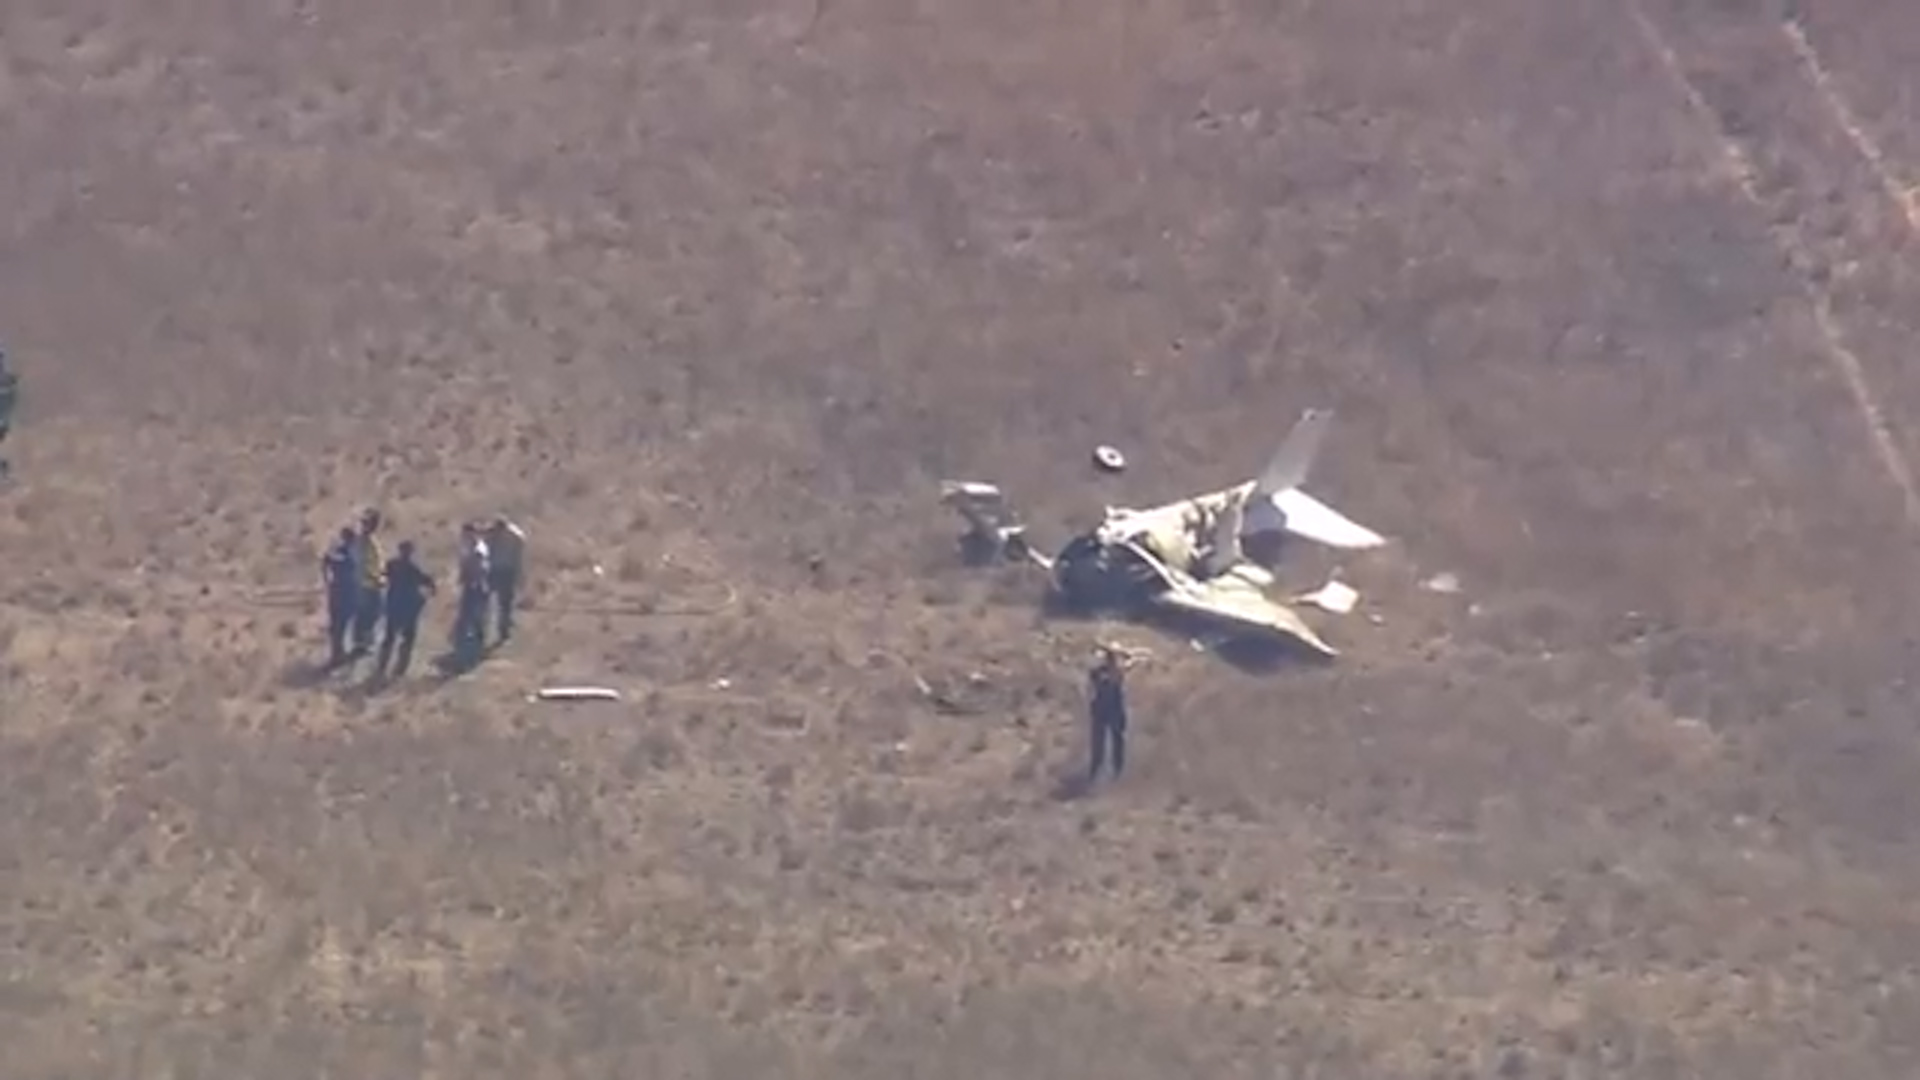 Chocaron dos avionetas en pleno vuelo en California: reportan varios muertos 